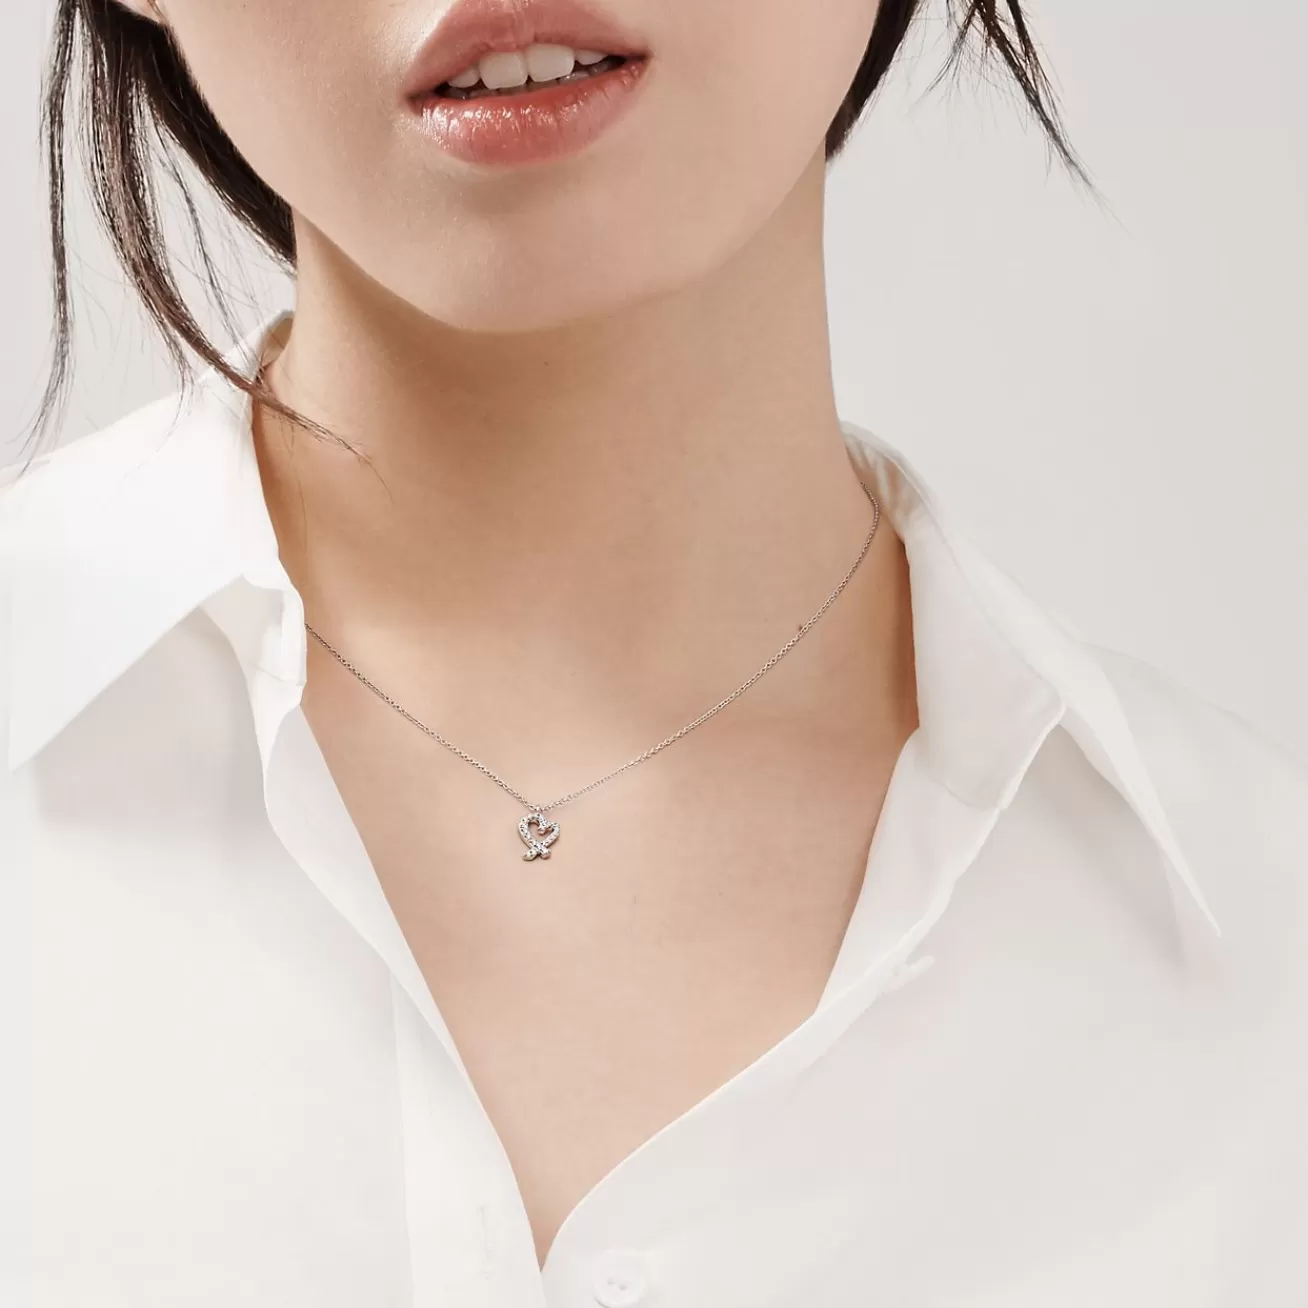 Tiffany & Co. Paloma Picasso® Loving Heart pendant in 18k white gold with diamonds. | ^ Necklaces & Pendants | Diamond Jewelry